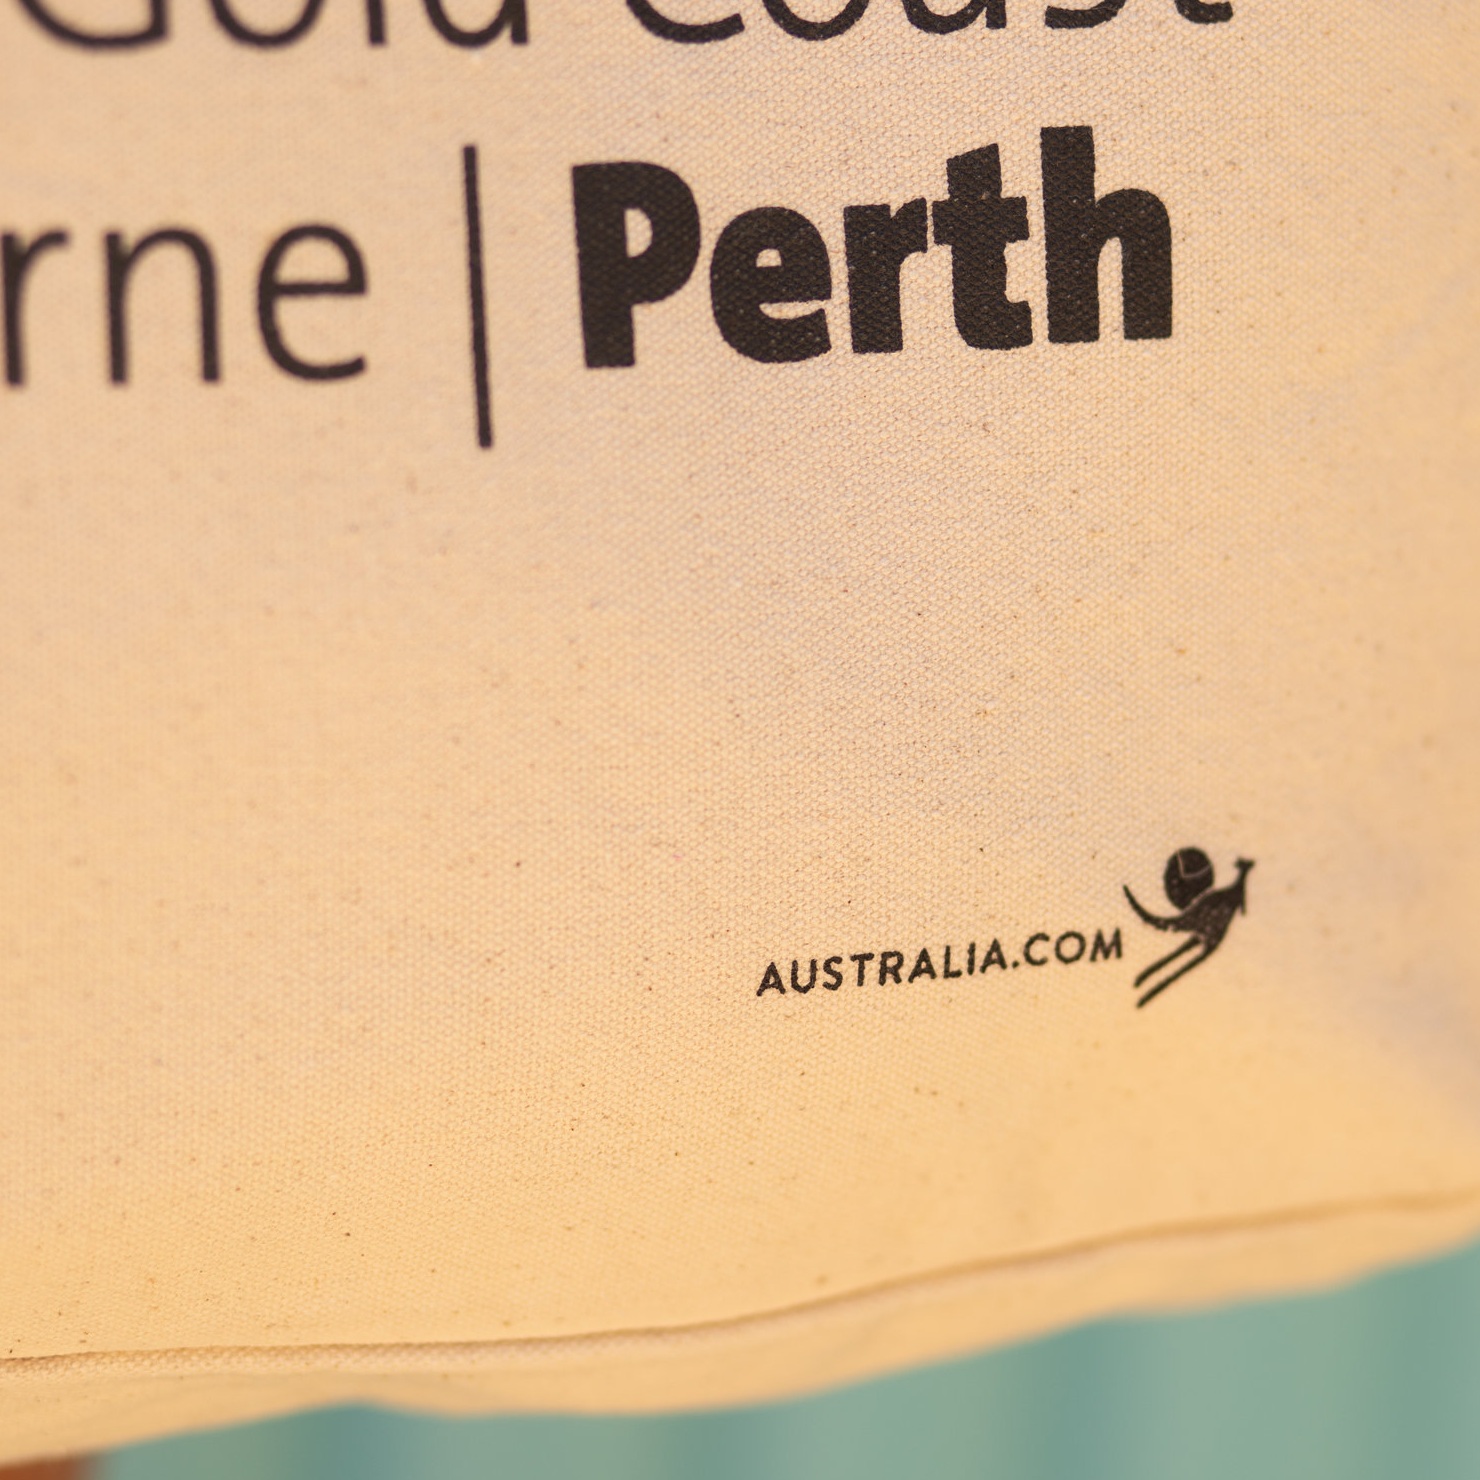 ATE Tourism Australia Custom Tote Bags - Perth & Australia.com.jpg